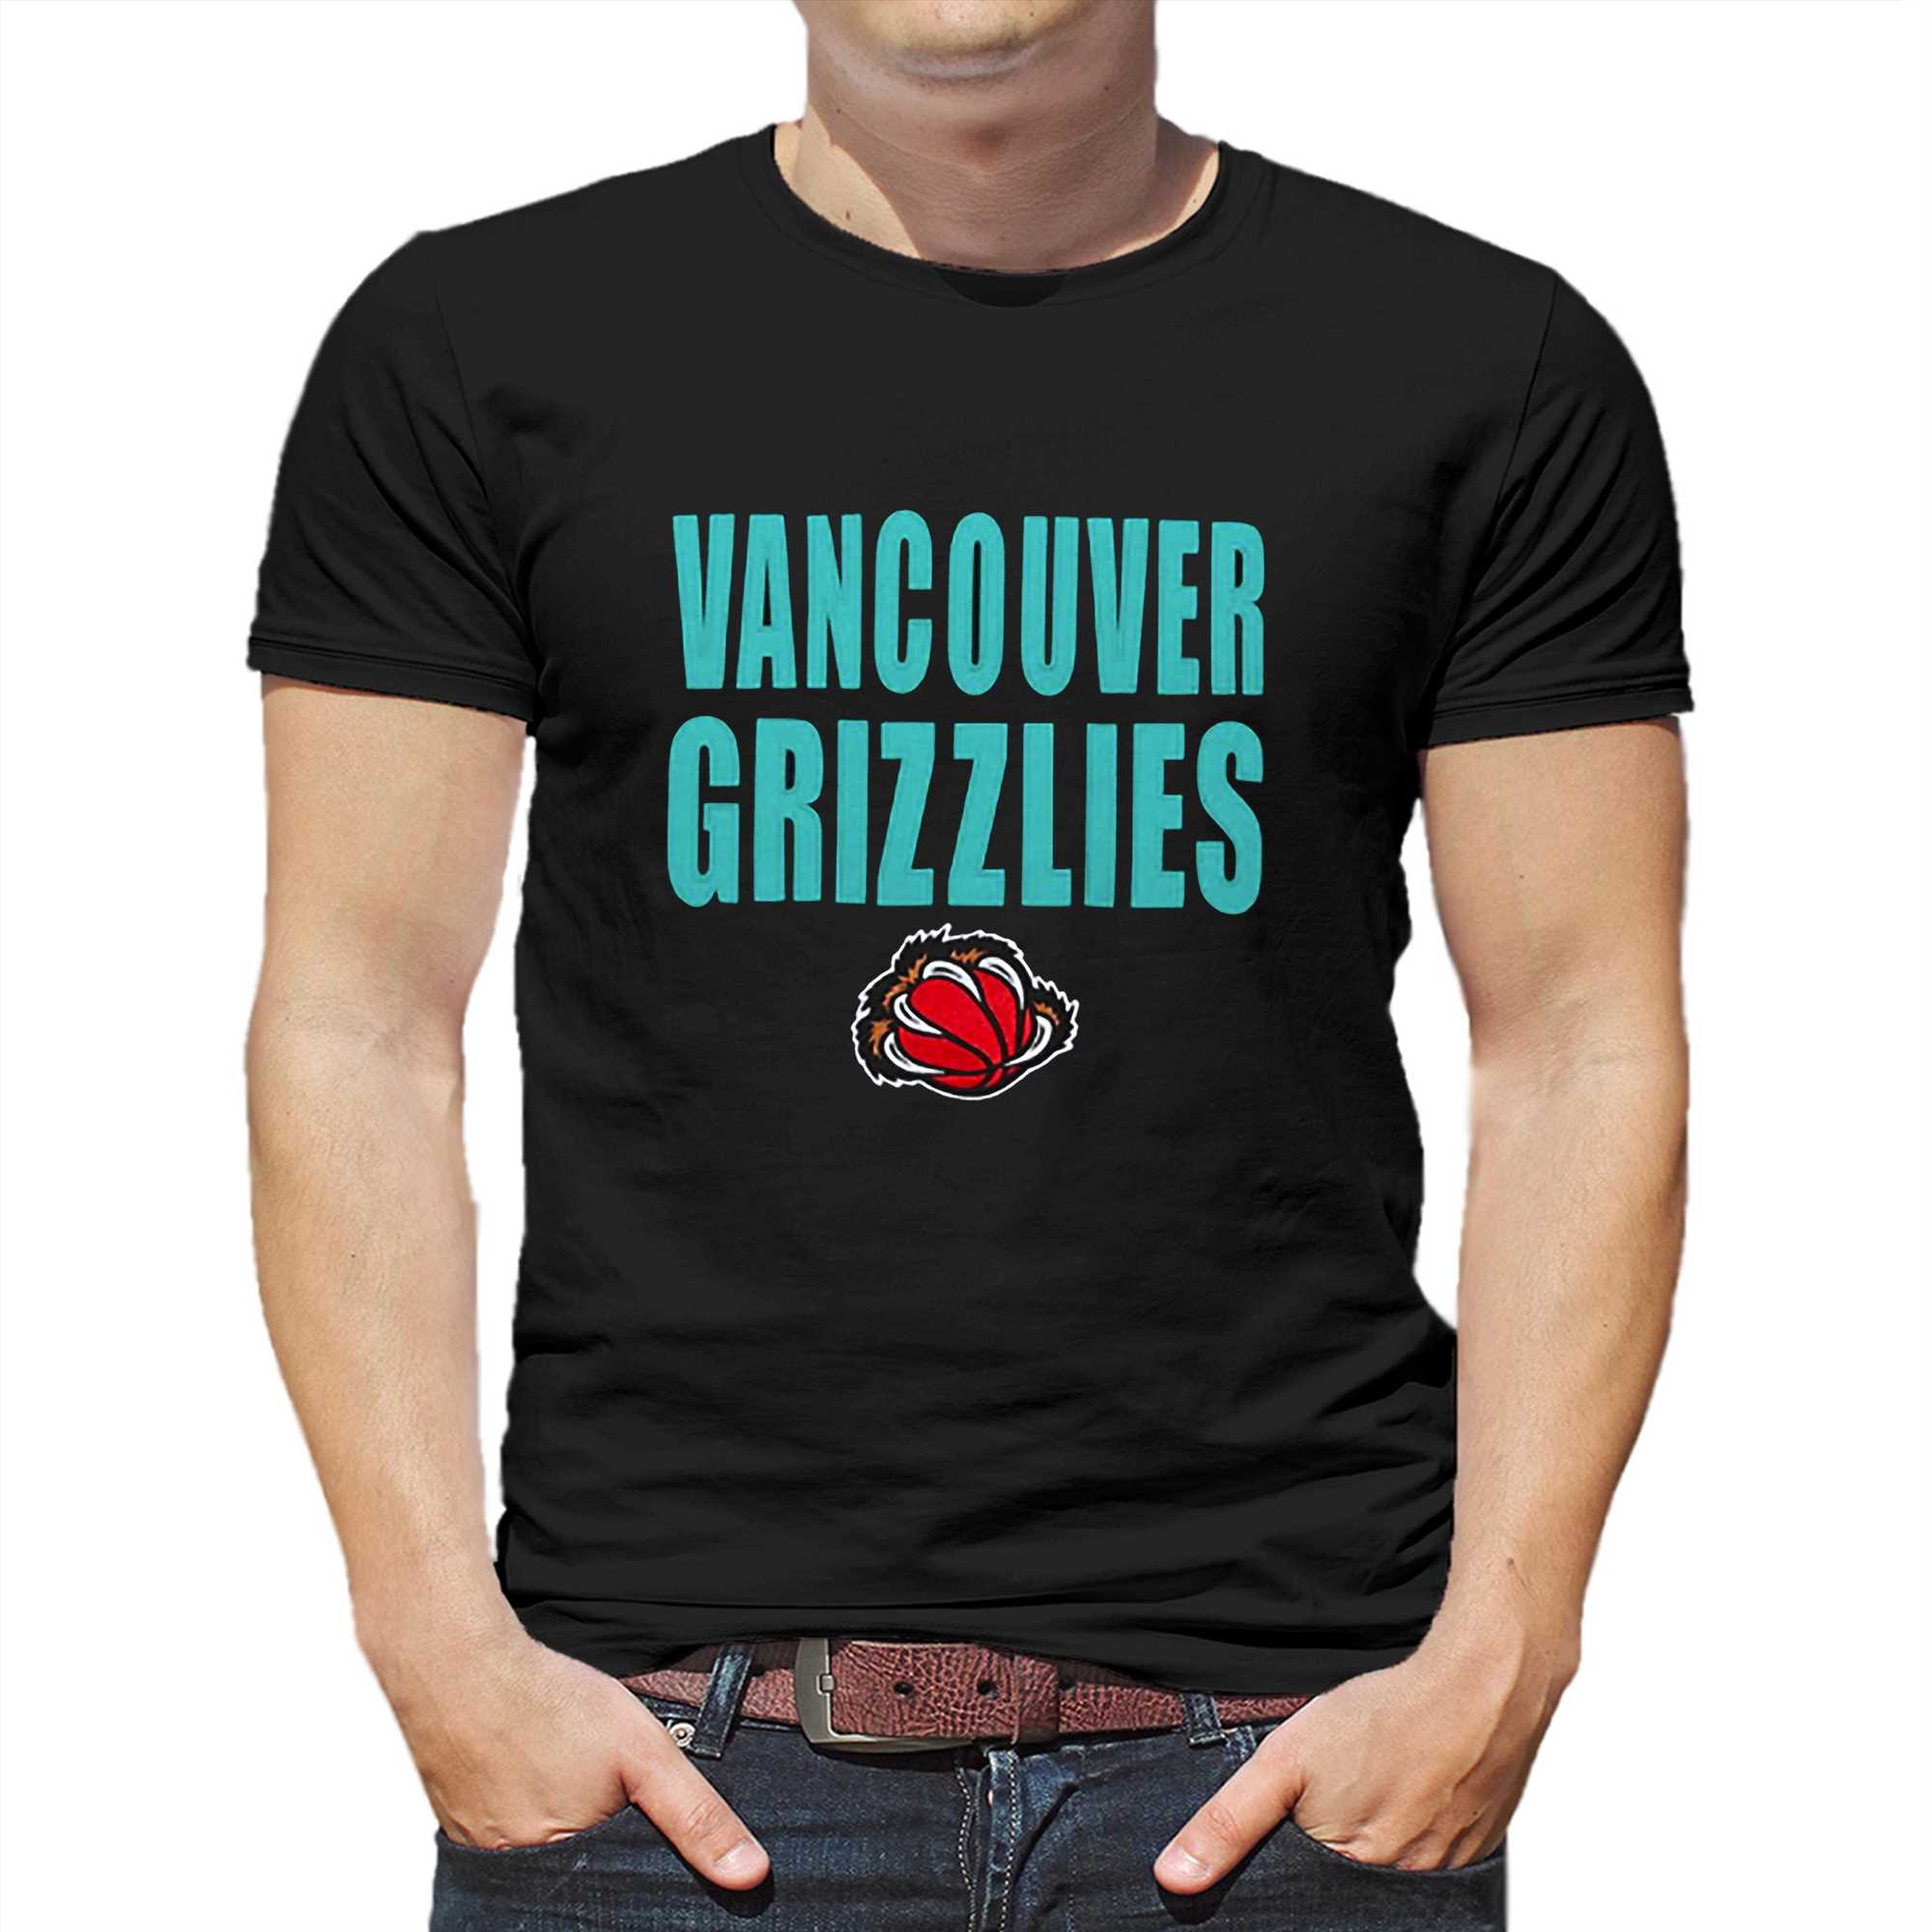 grizzlies t shirt near me